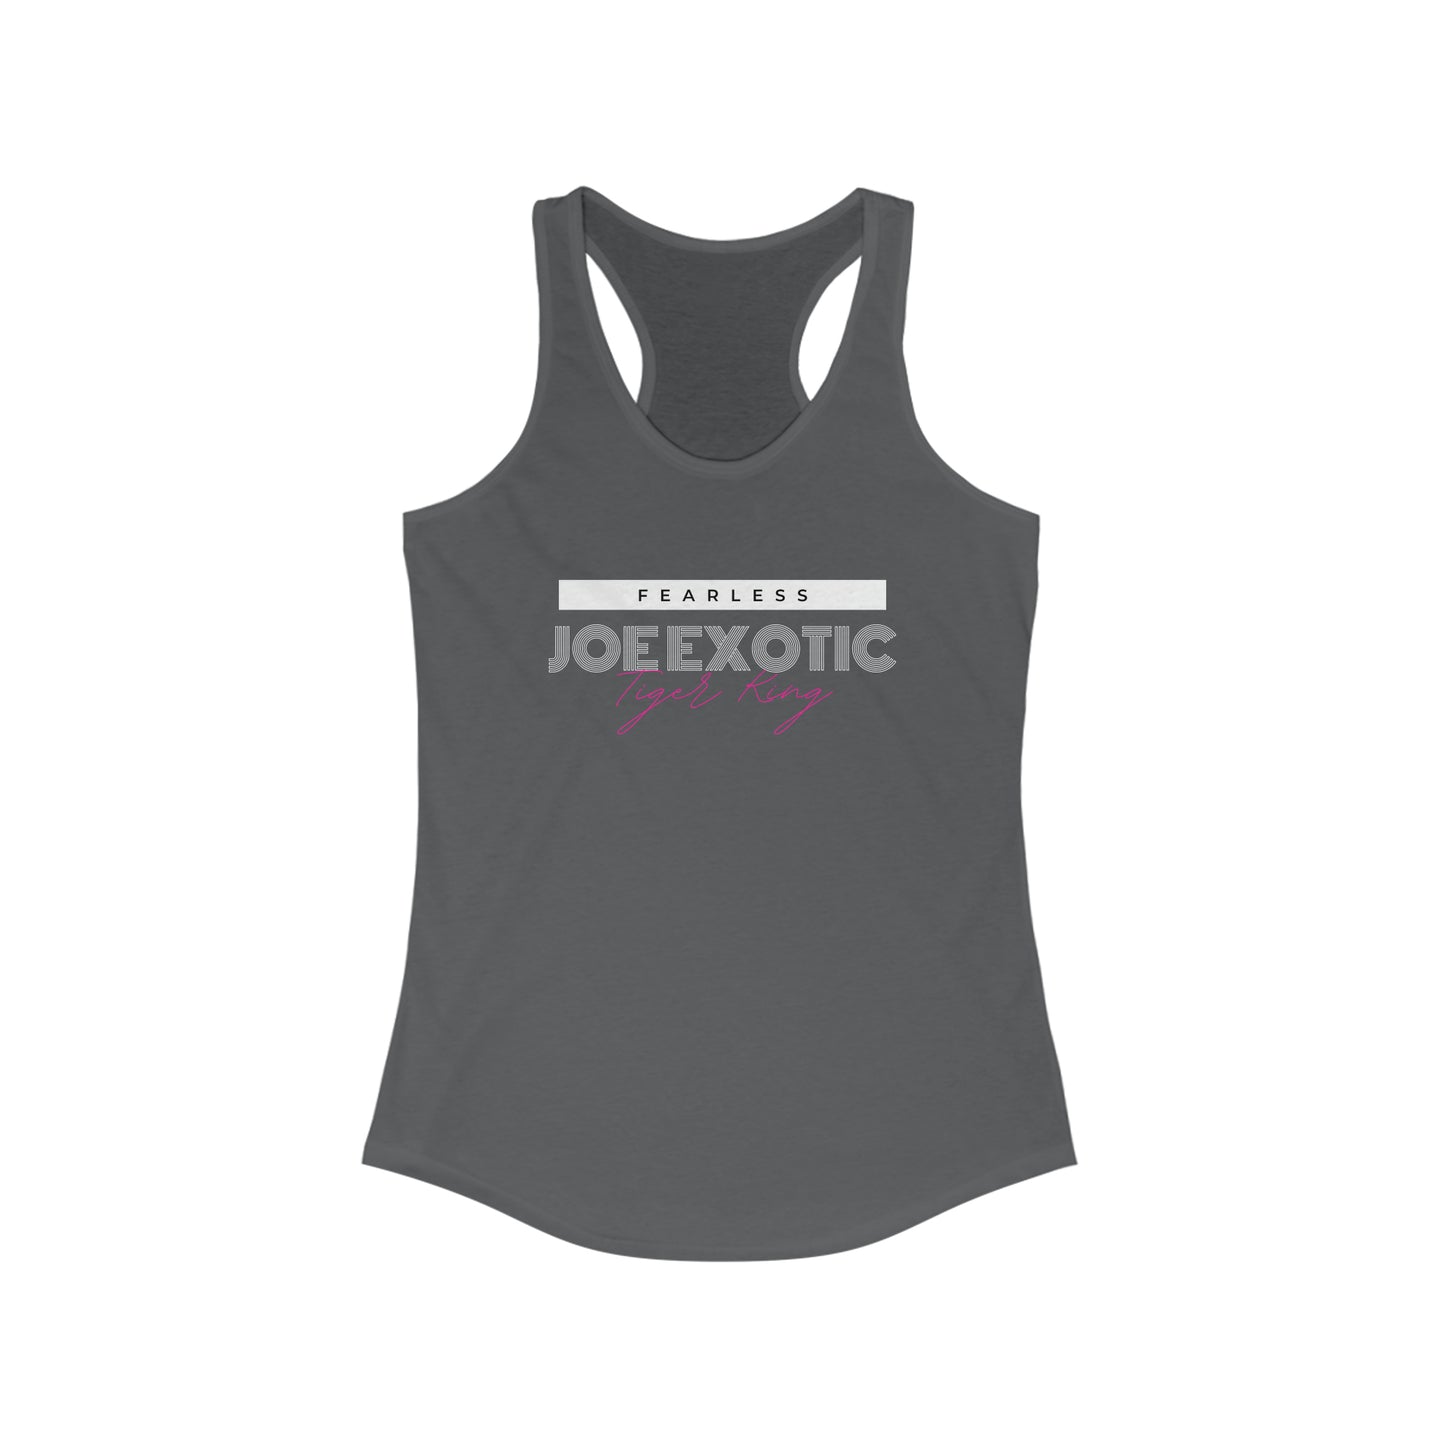 Fearless Joe Exotic Tiger King Women's Racerback Tank – Embrace Confidence!